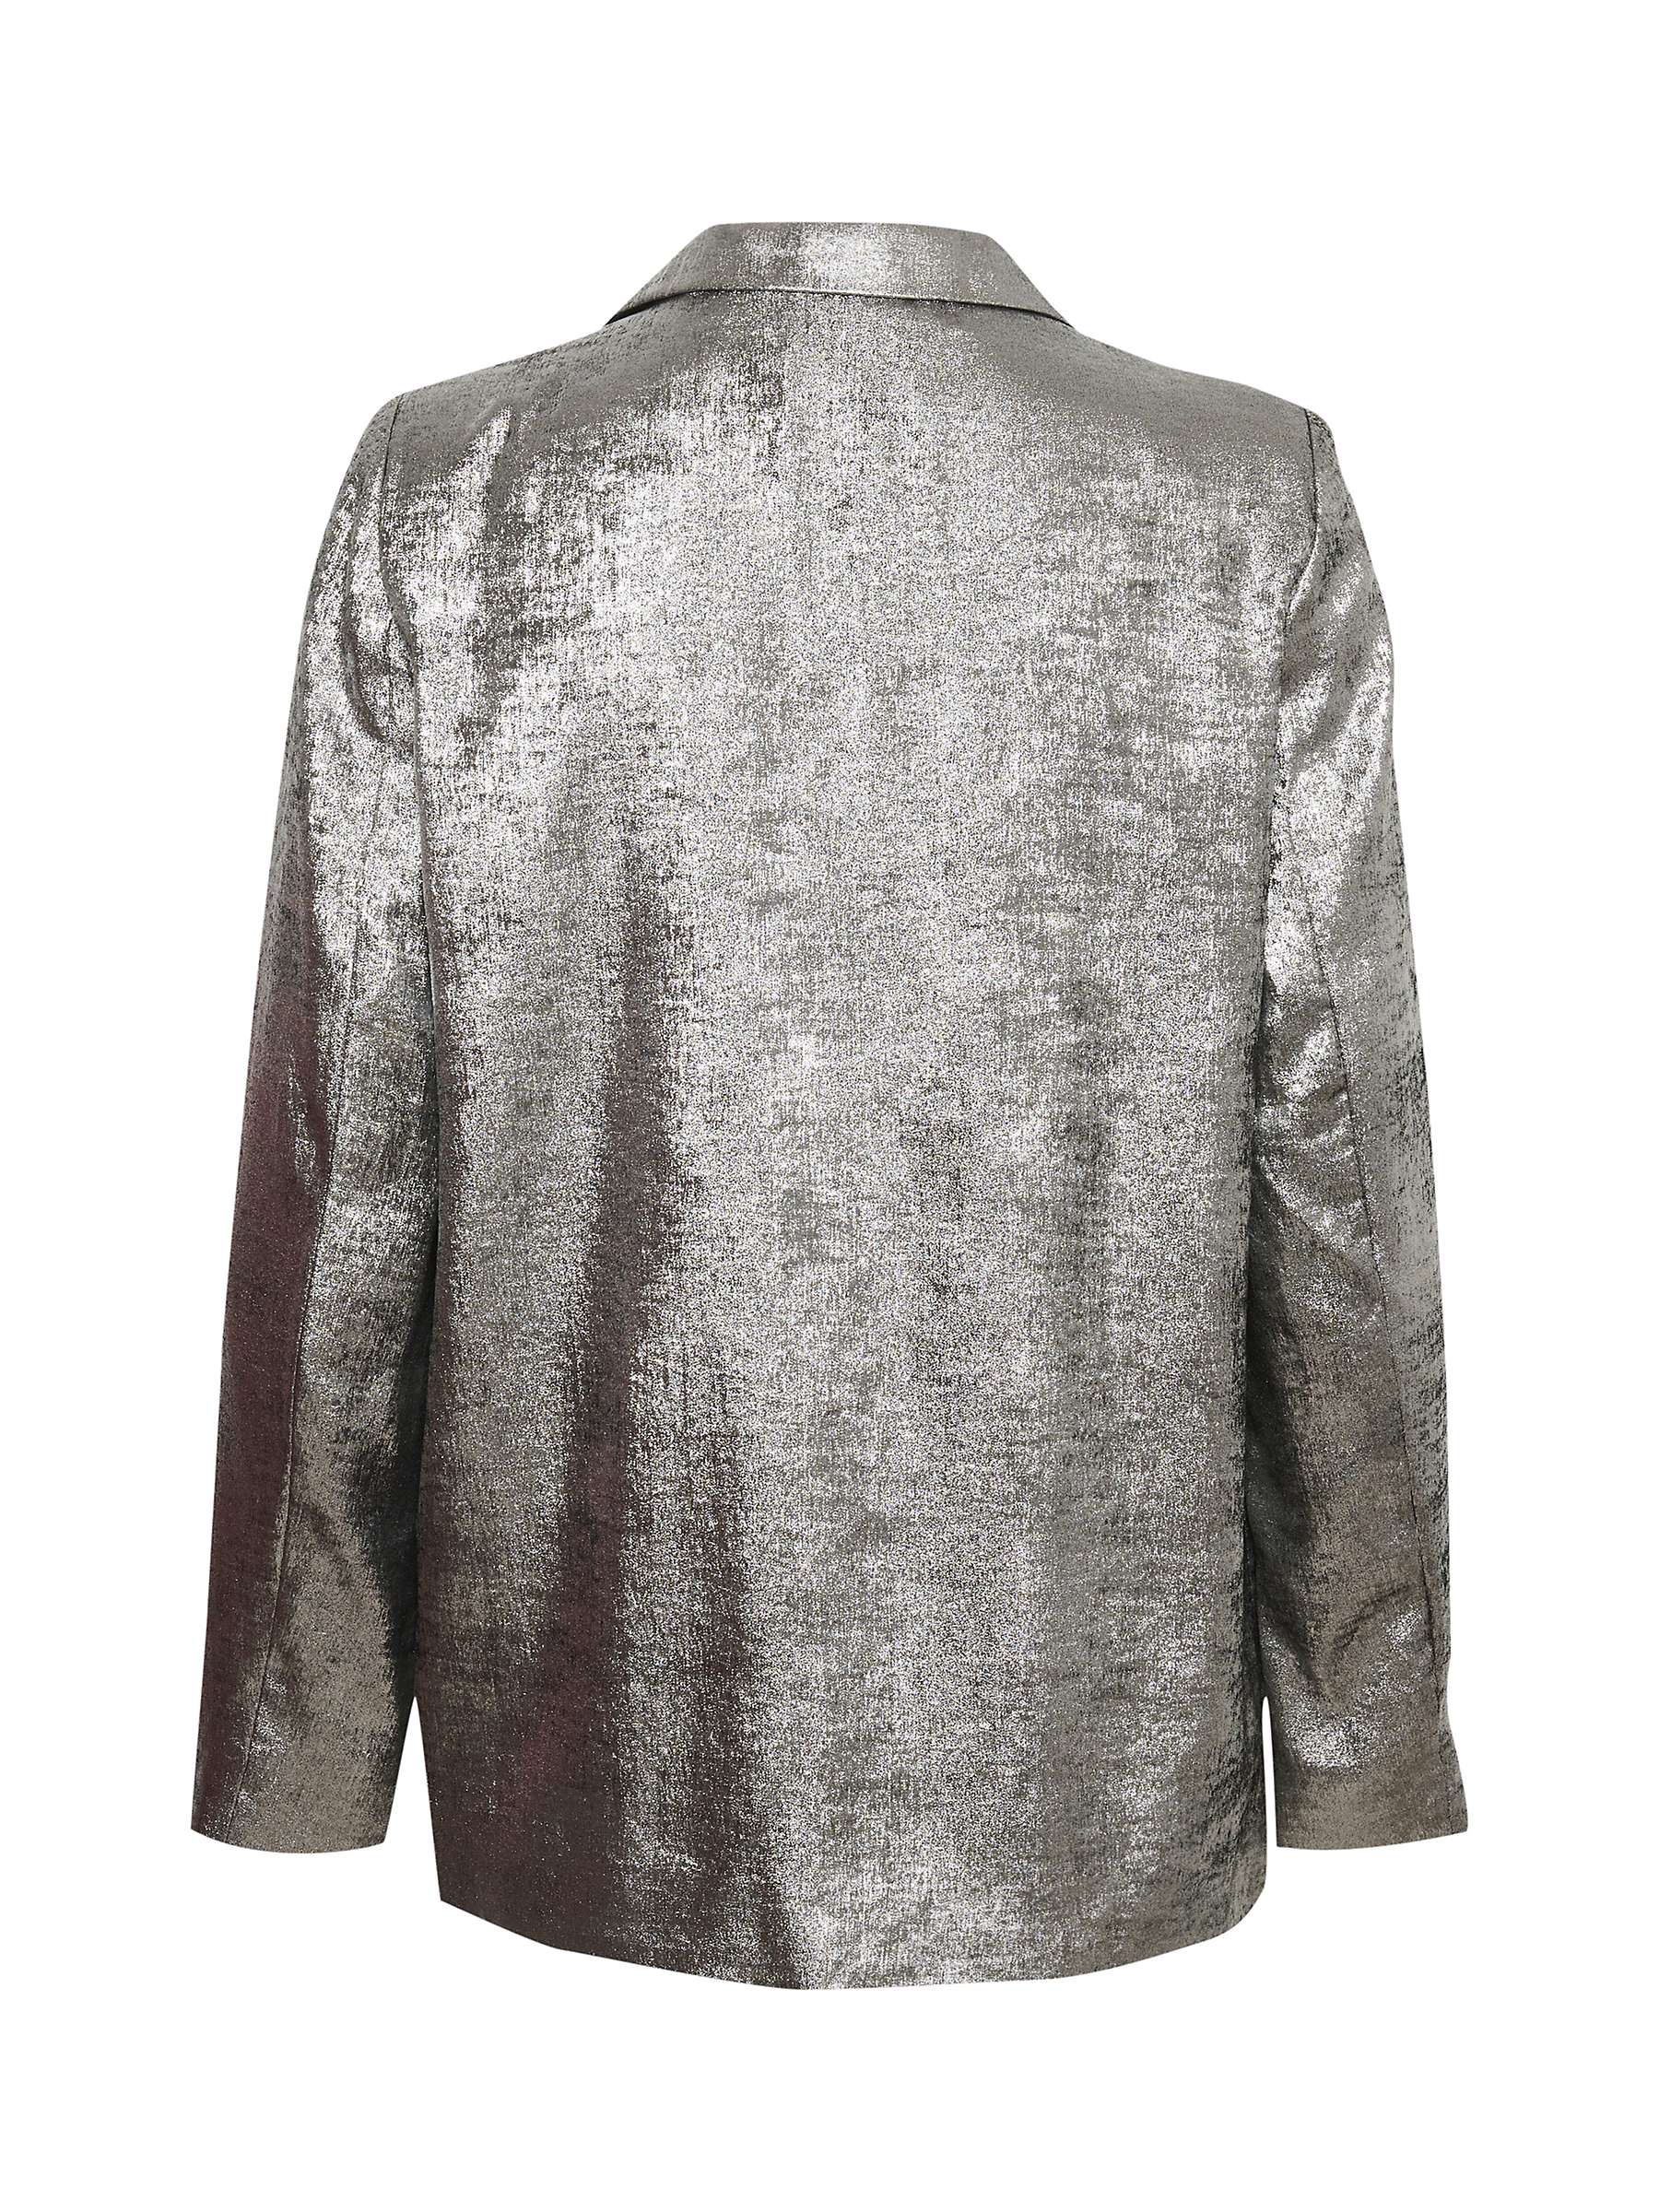 Buy Soaked In Luxury Ronya Blazer, Silver Foil Online at johnlewis.com